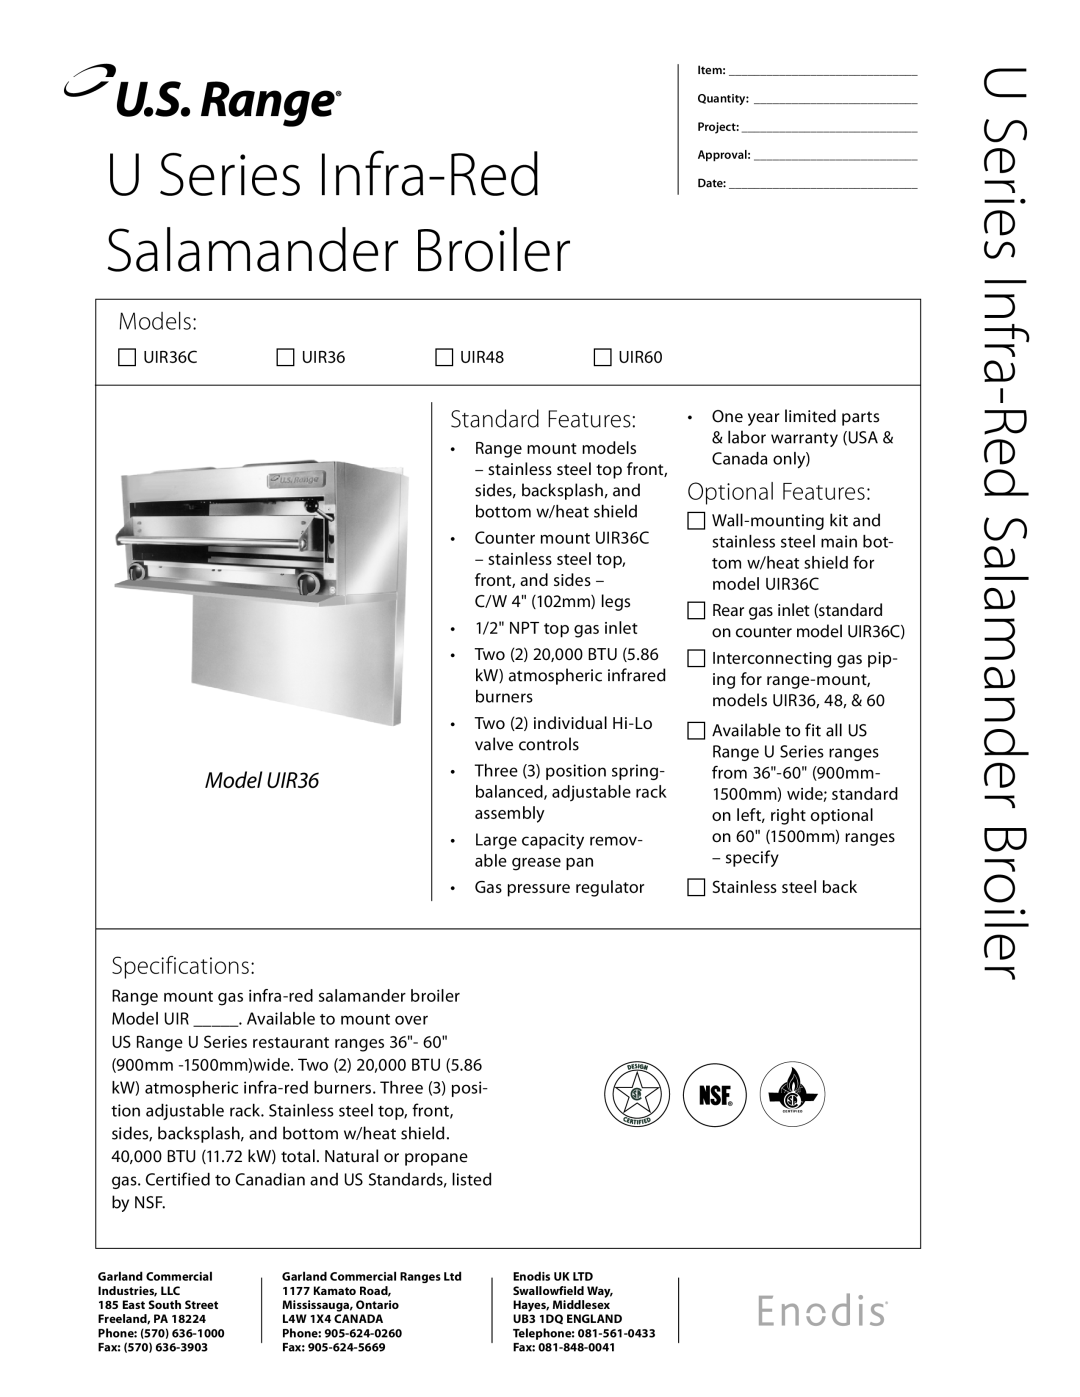 Garland UIR36 specifications U Series Infra-Red, Red Salamander Broiler, Models, Standard Features, Optional Features 